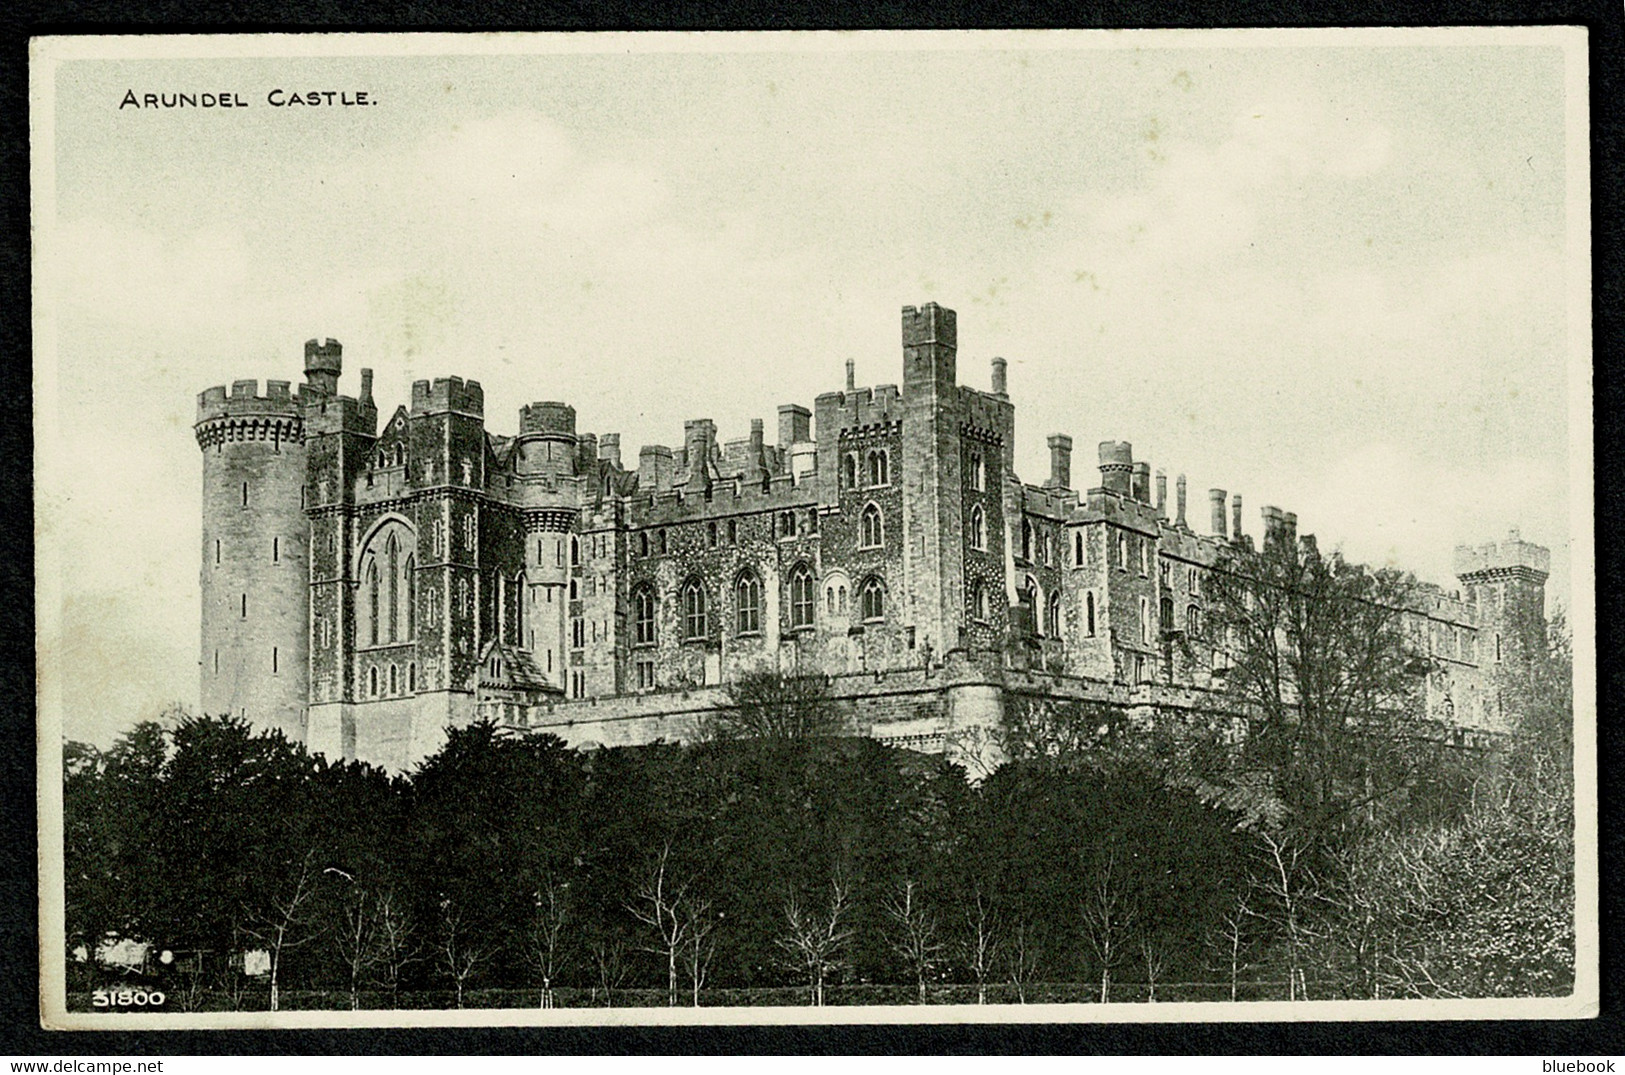 Ref 1569 - Early Postcard - Arundel Castle - Sussex - Arundel